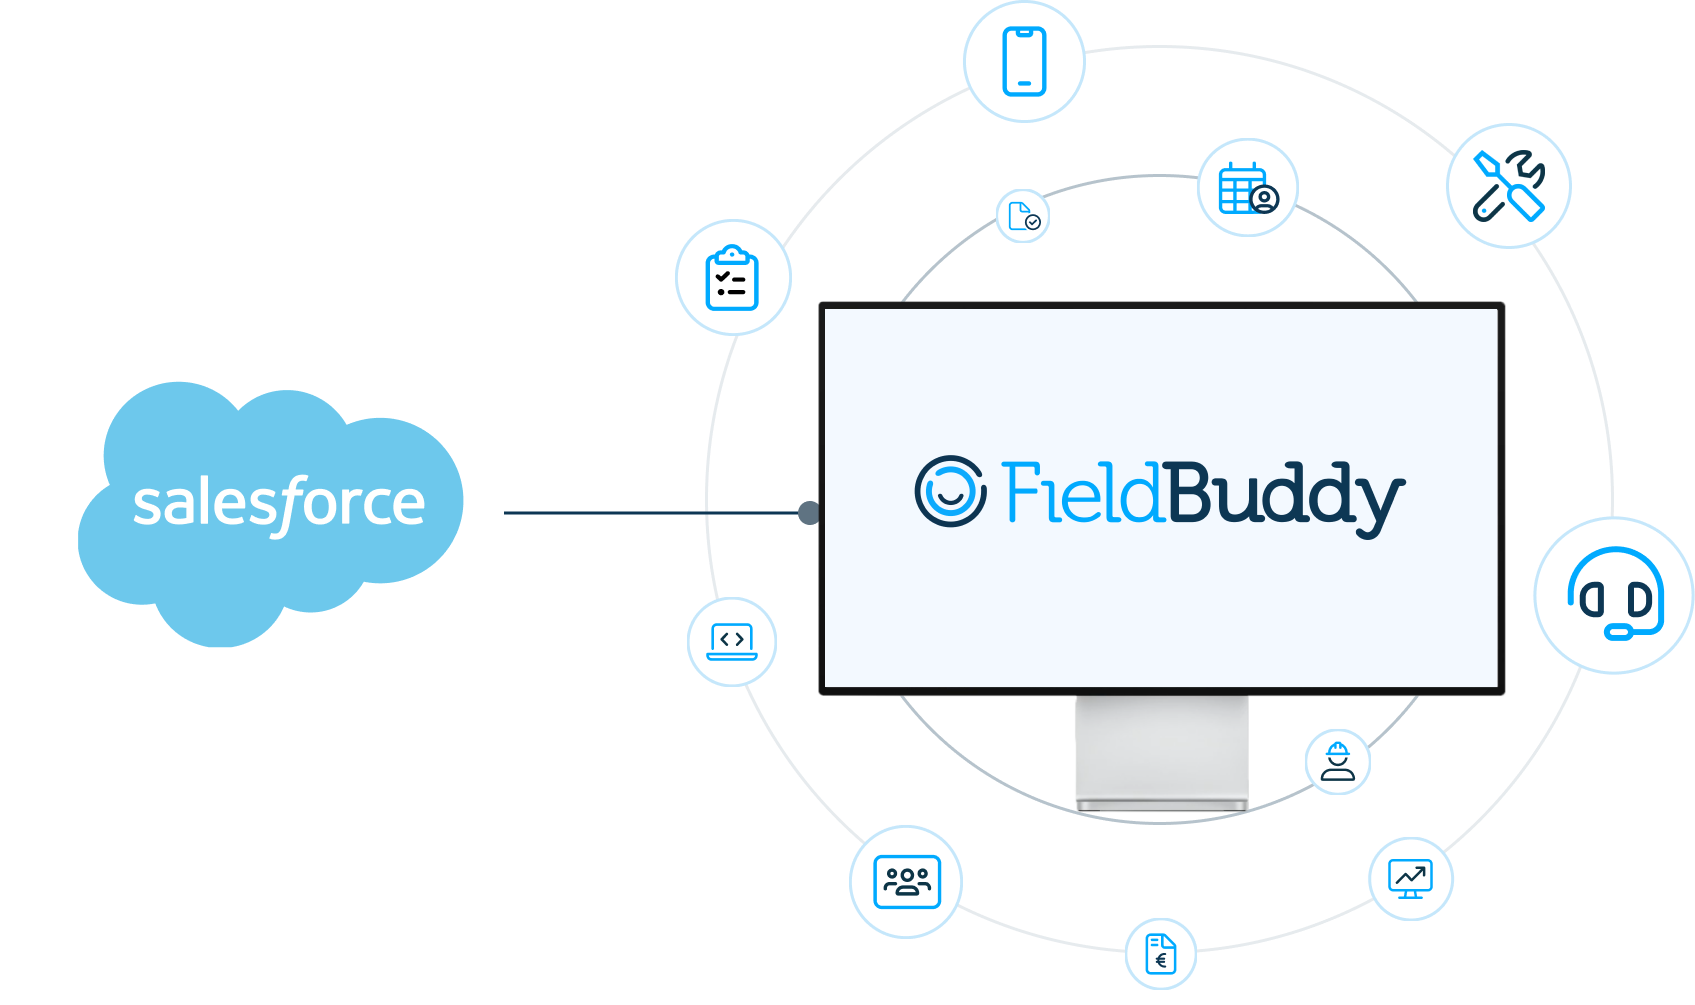 salesforce and fieldbuddy visual